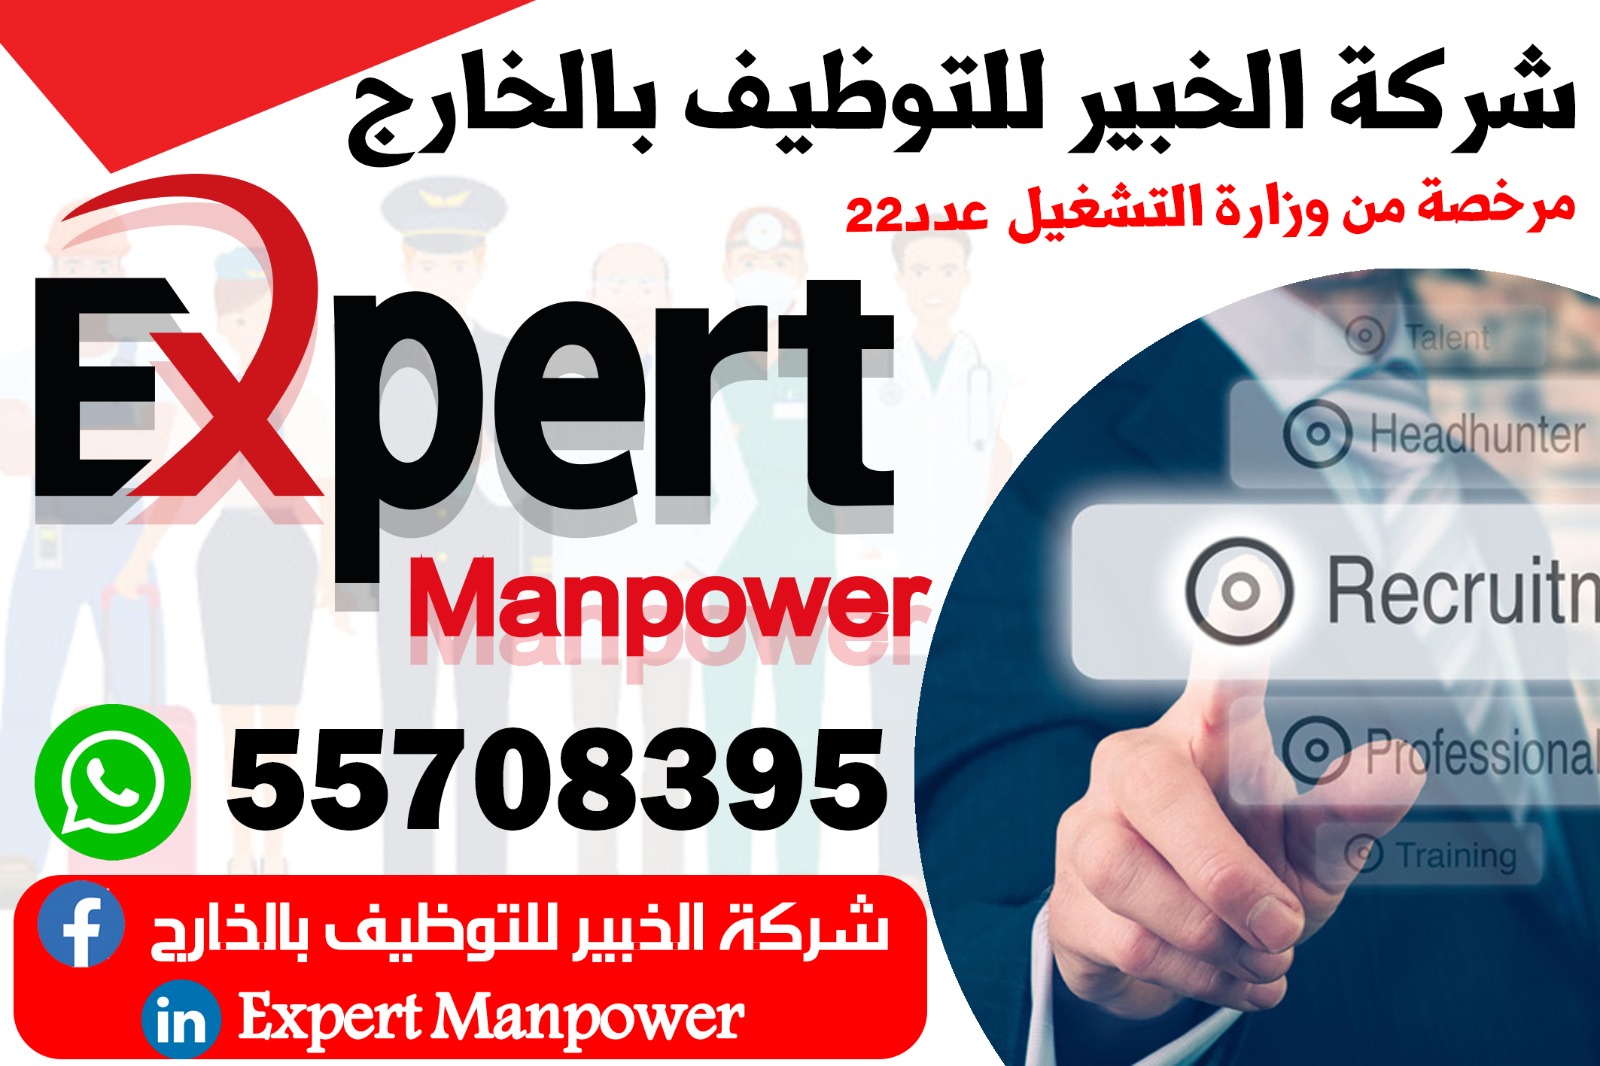 tunisian recruitment agency-recruitment agency in tunisia-0021655708395